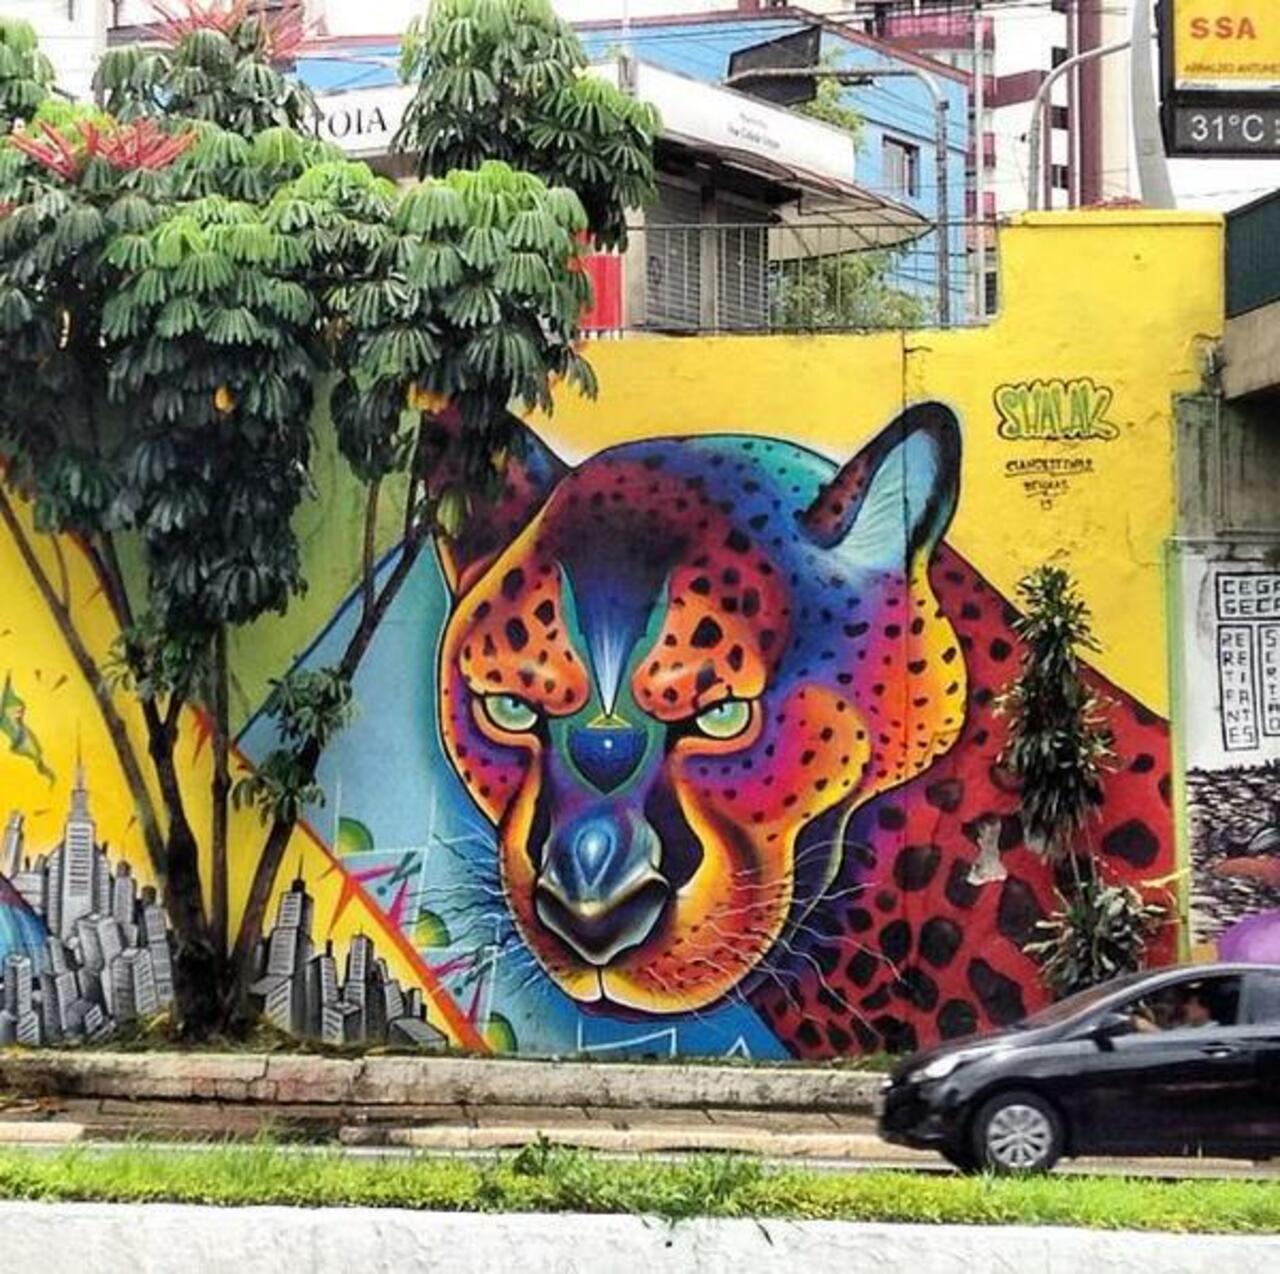 RT @Pitchuskita: ShalakAttack 
São Paulo 
#art #graffiti #mural #streetart #urbanart http://t.co/NBjZPnN4rG